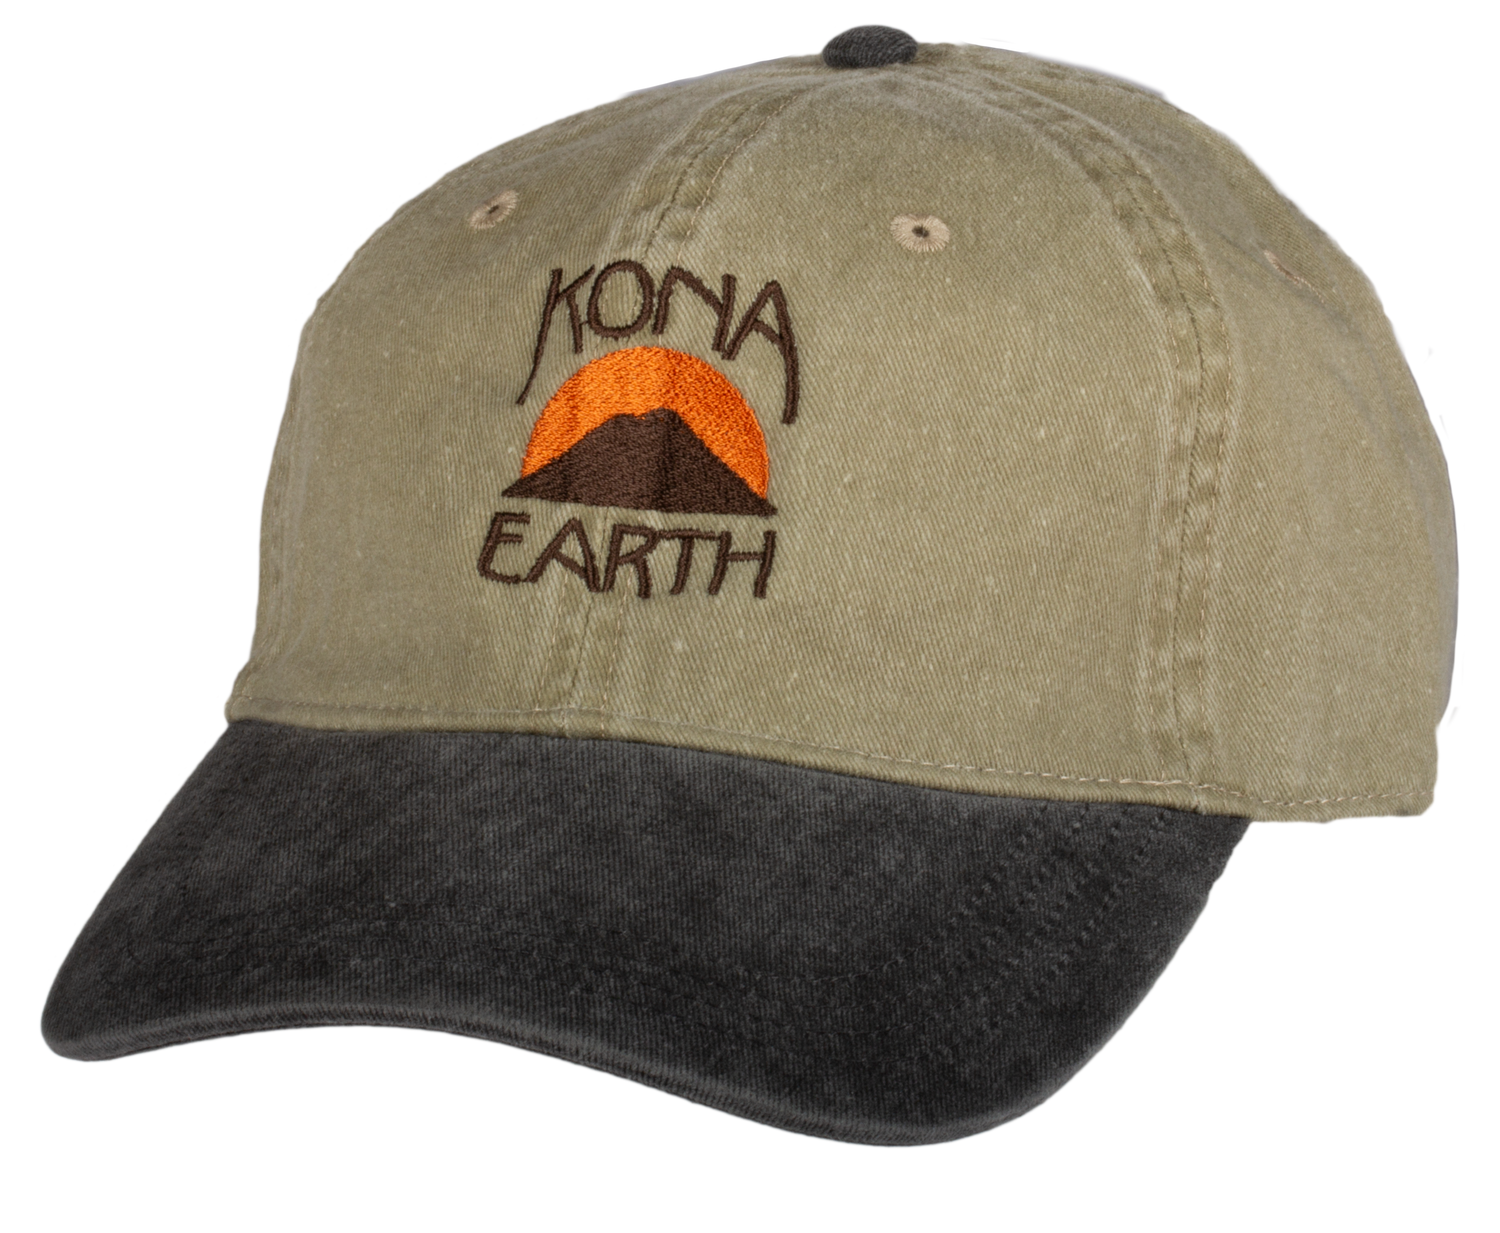 Kona Earth hat with black bill